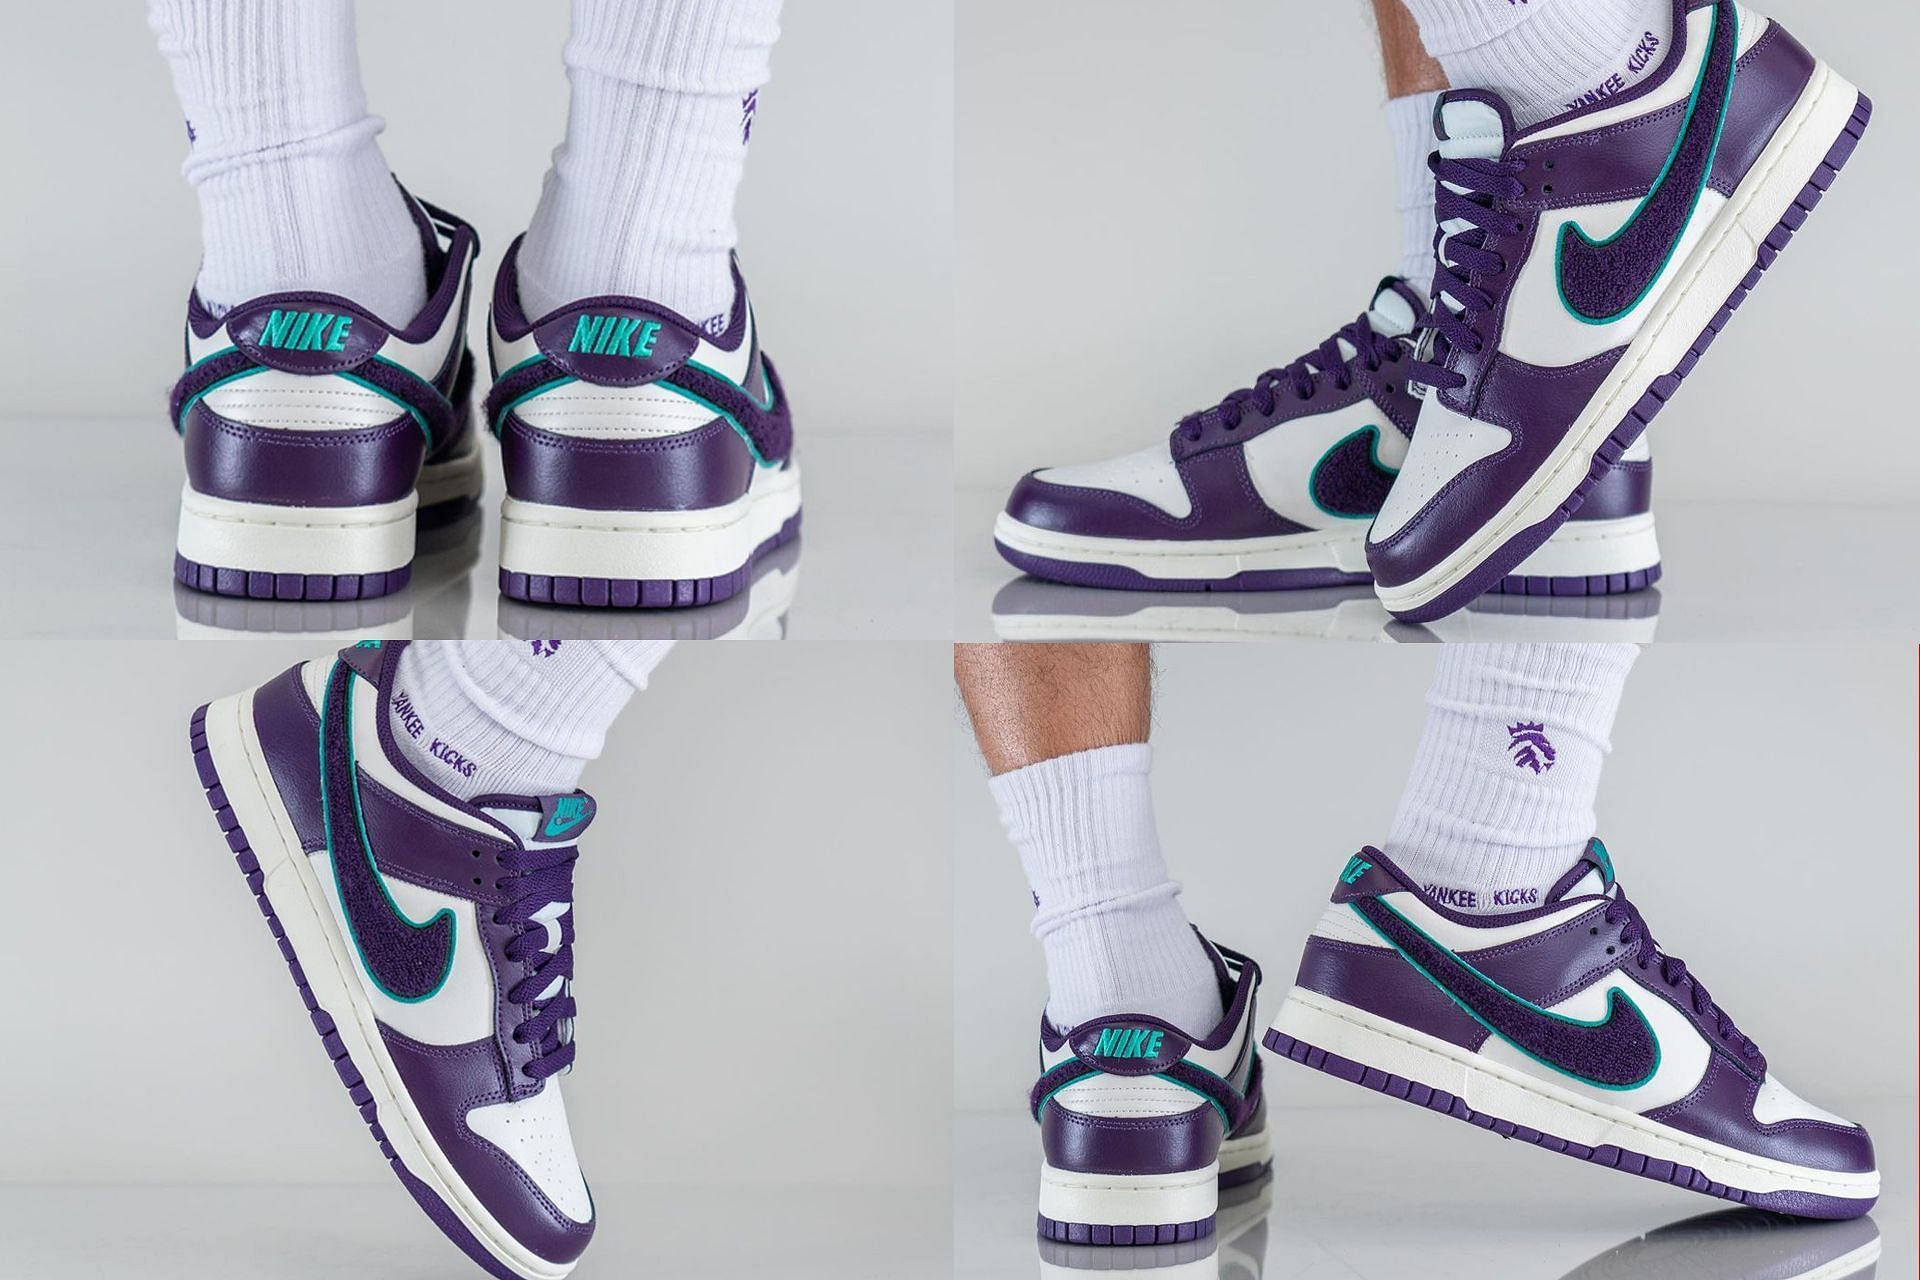 Upcoming Nike Dunk Low Grand Purple sneakers from the Chenille Swoosh series (Image via @yankeekicks / Instagram)